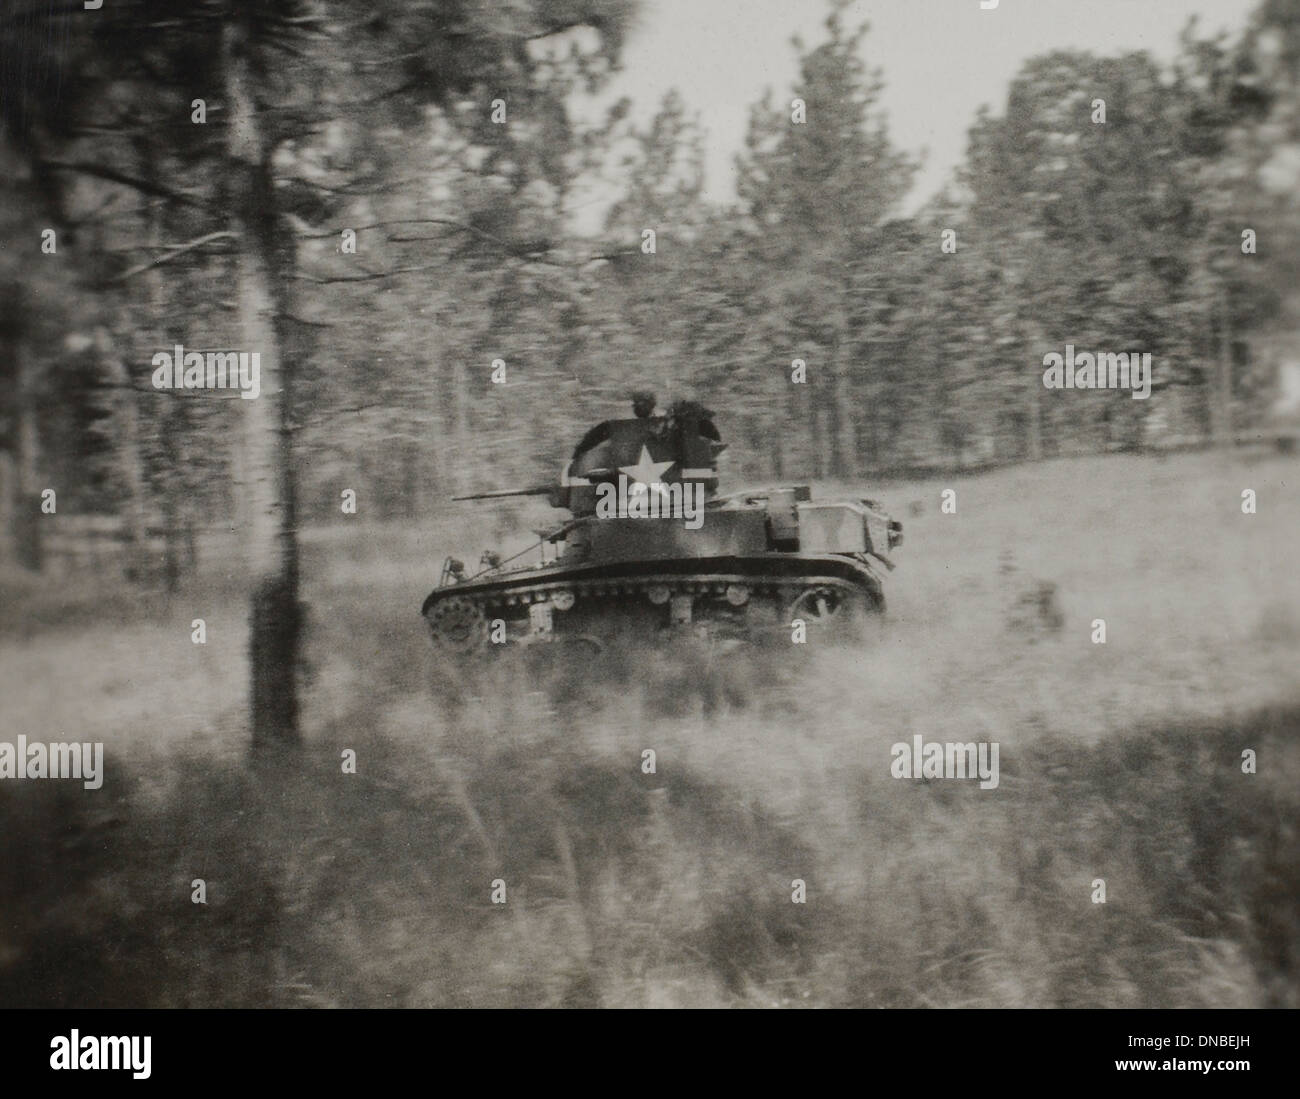 Tank-Training und Zielübungen, WWII, HQ 2nd Battalion, 389th Infanterie, u. s. Army Militärbasis, Indiana, USA, 1942 Stockfoto